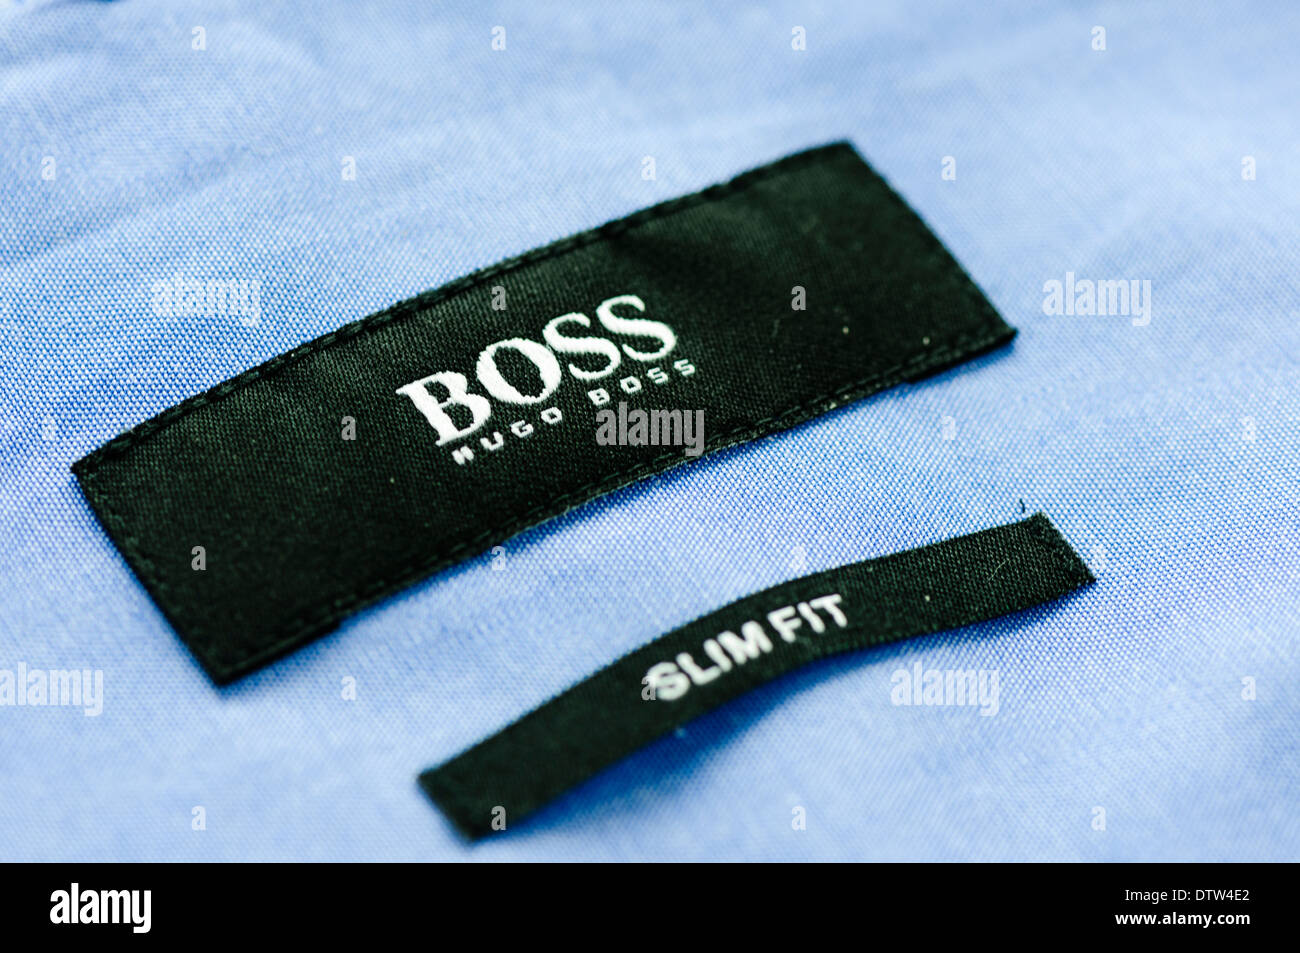 Label on a Hugo Boss men's shirt Stock Photo - Alamy